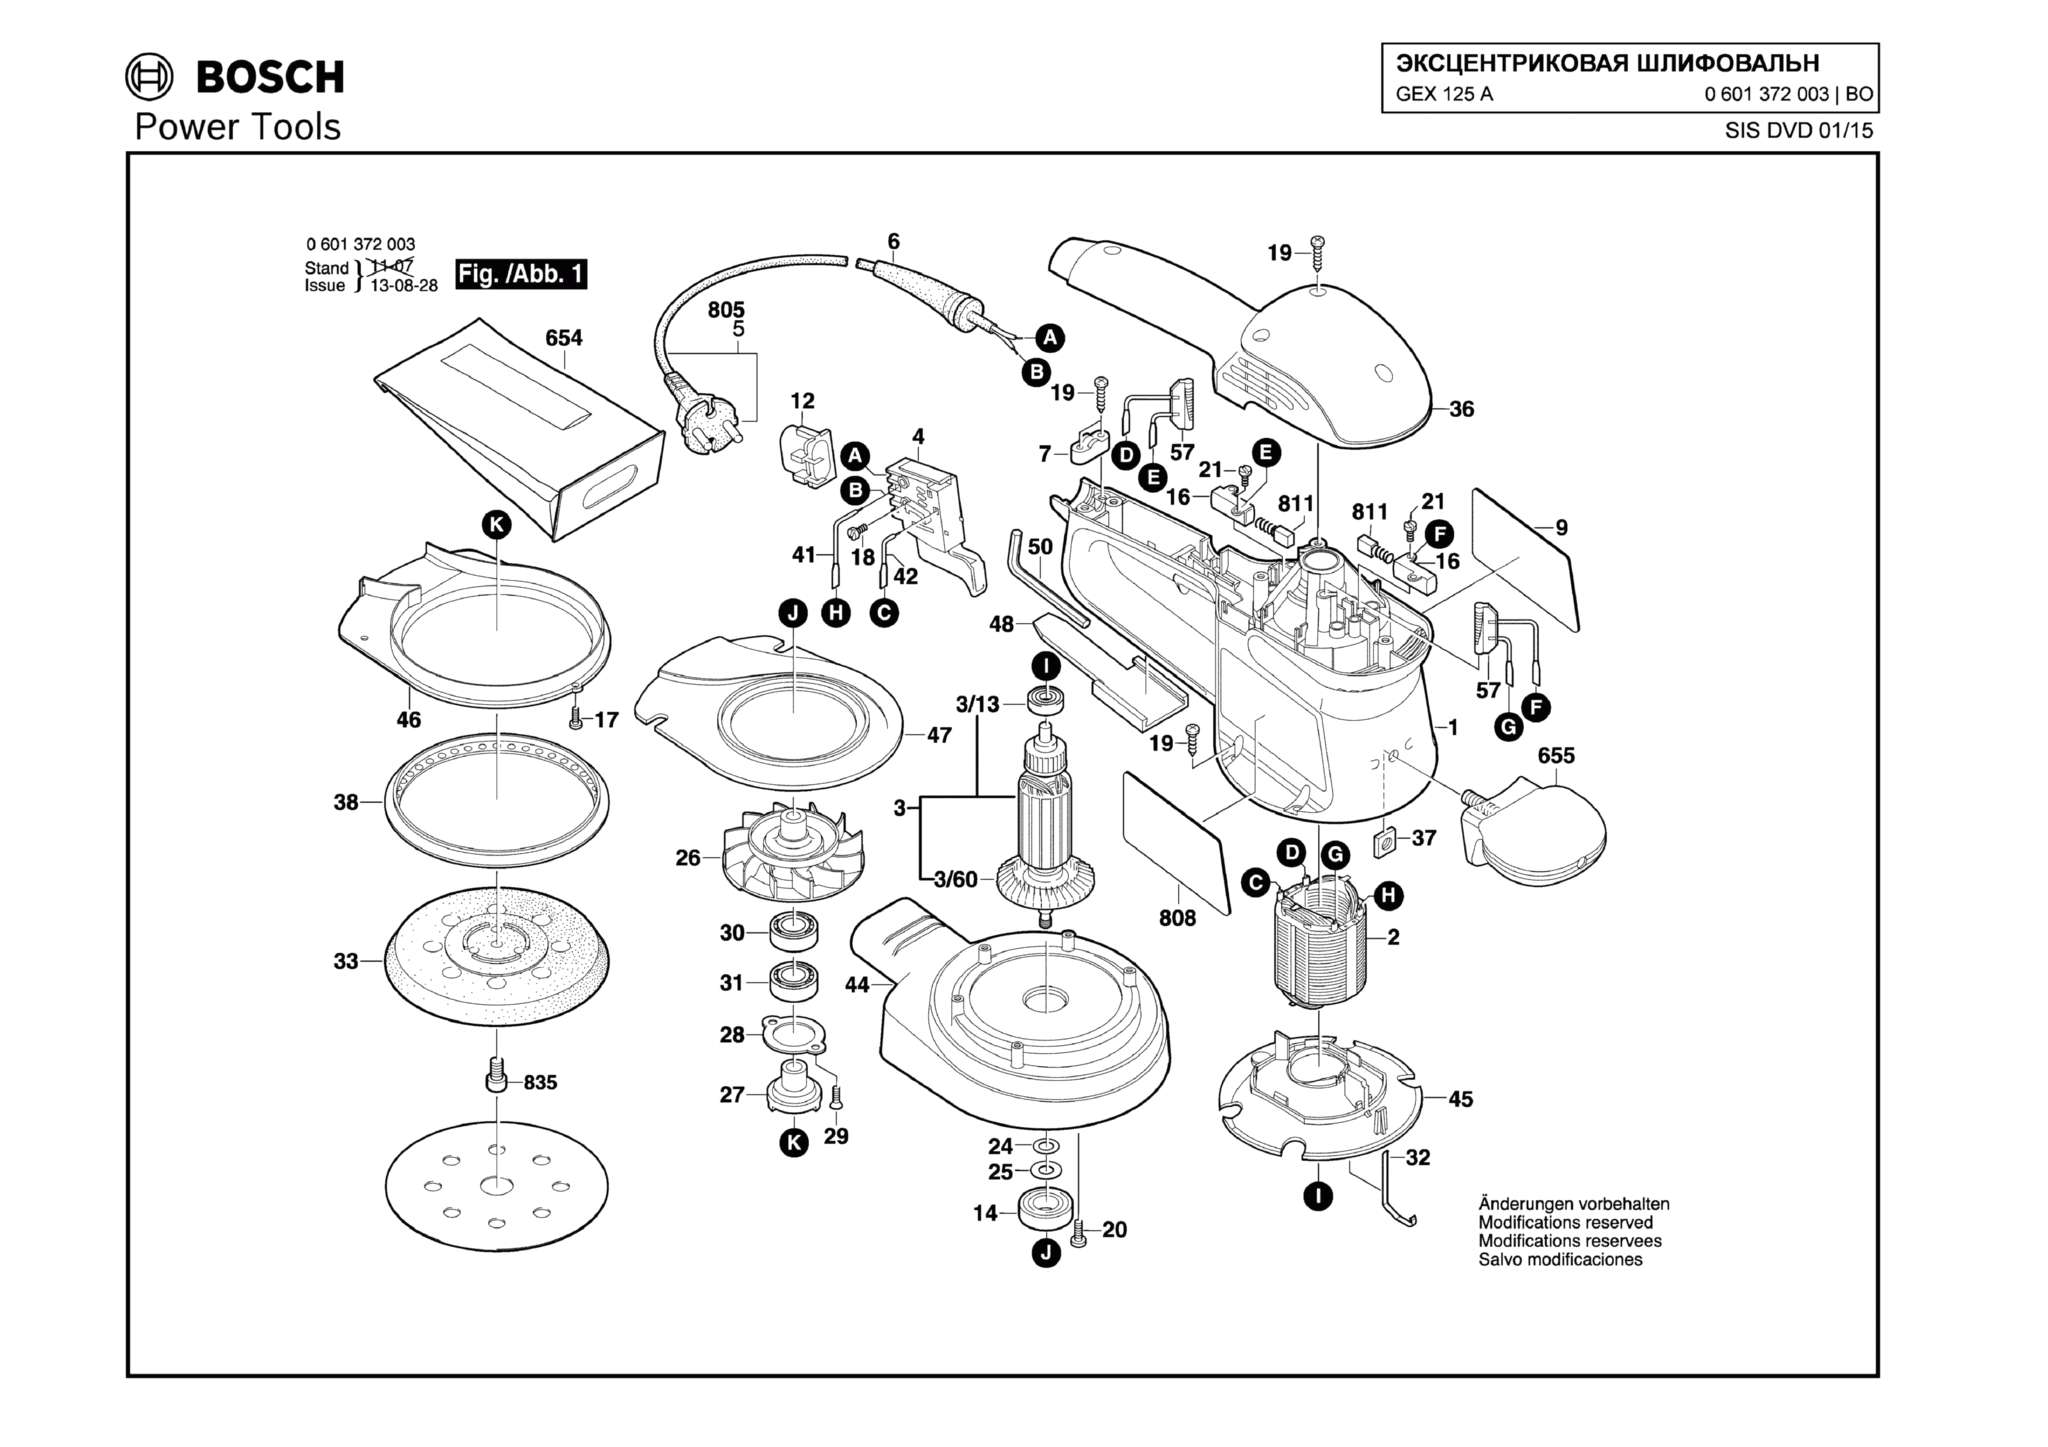 Запчасти, схема и деталировка Bosch GEX 125 A (ТИП 0601372003)